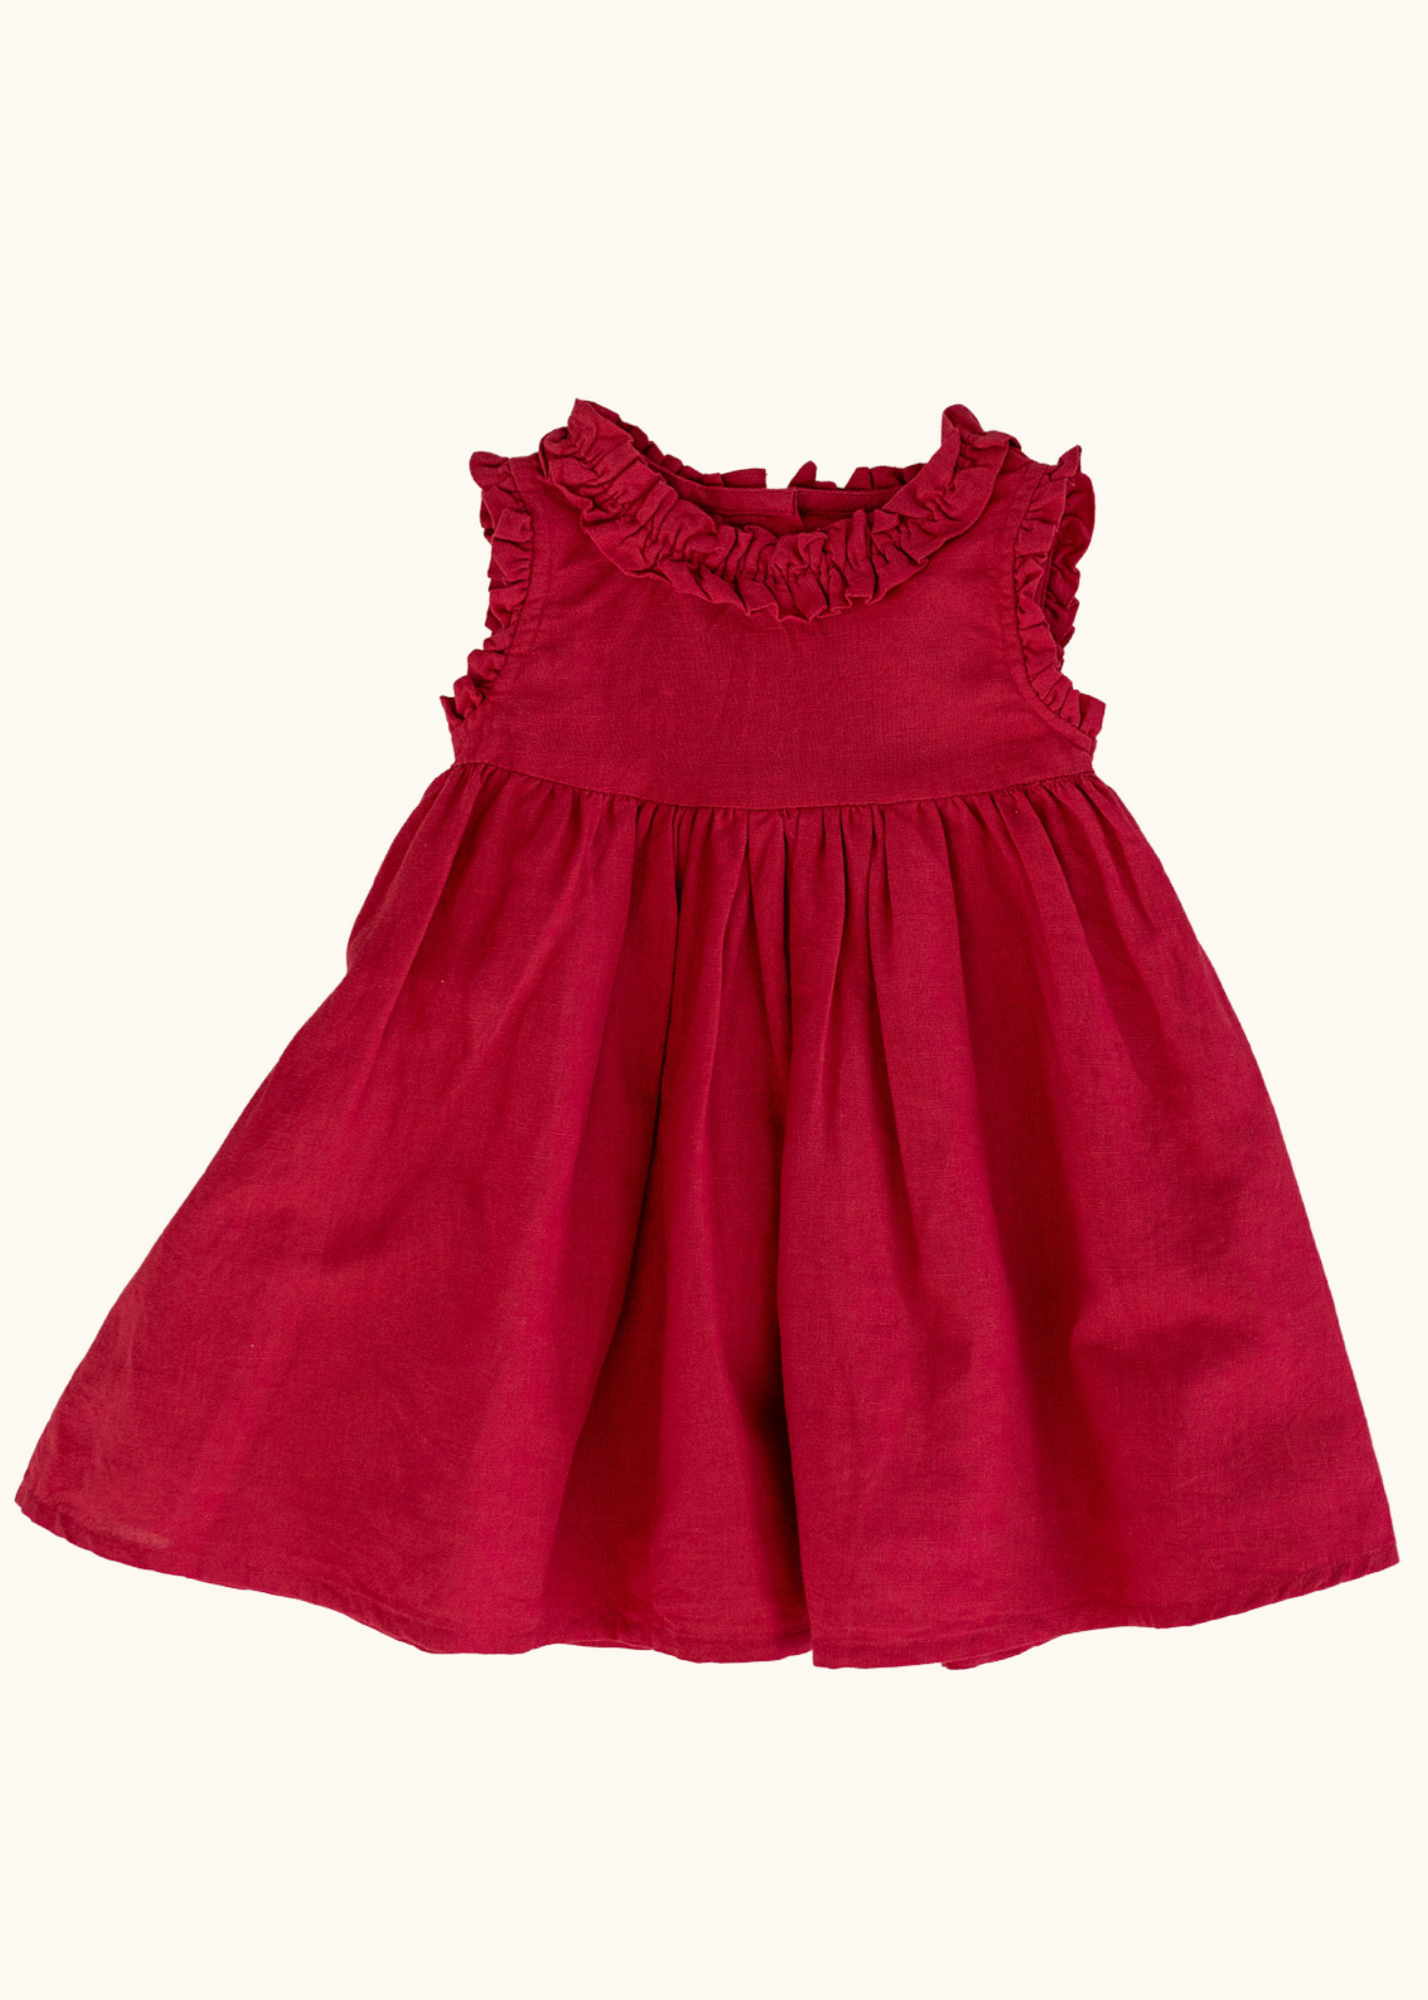 Ruby Roo Ruffle Dress